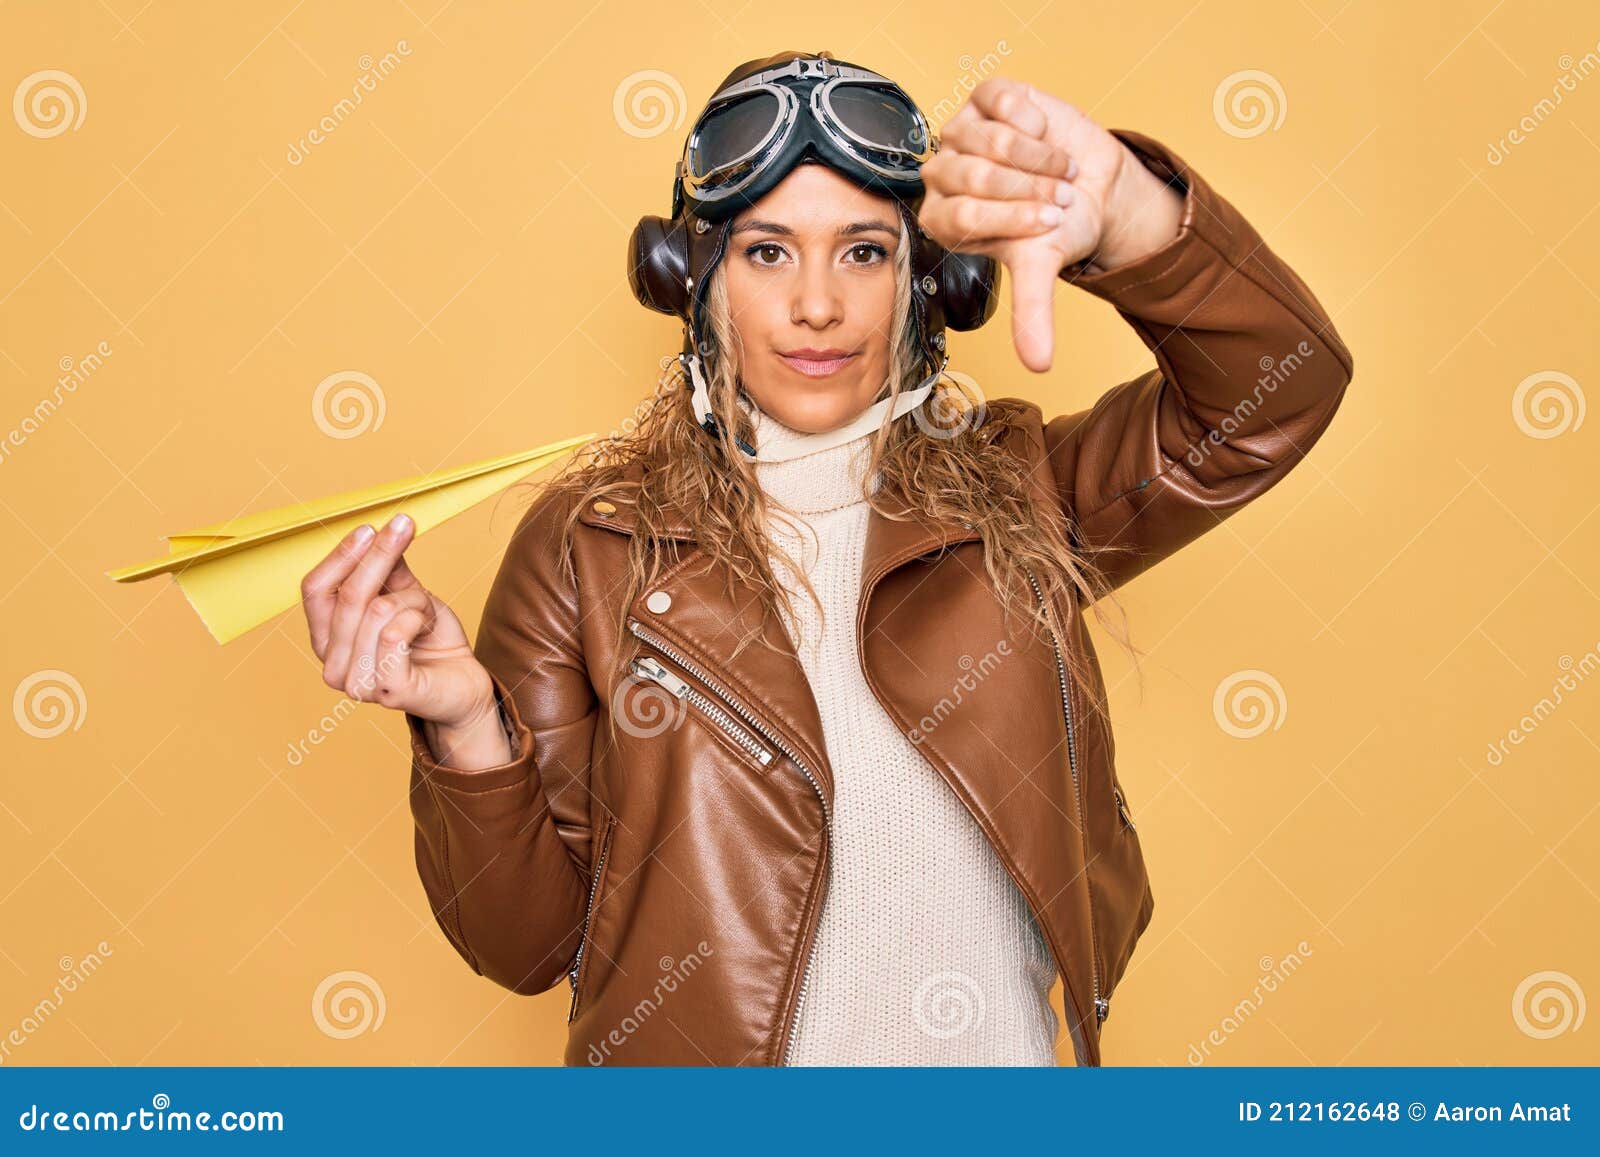 Aviator sunglasses on blonde woman - wide 4